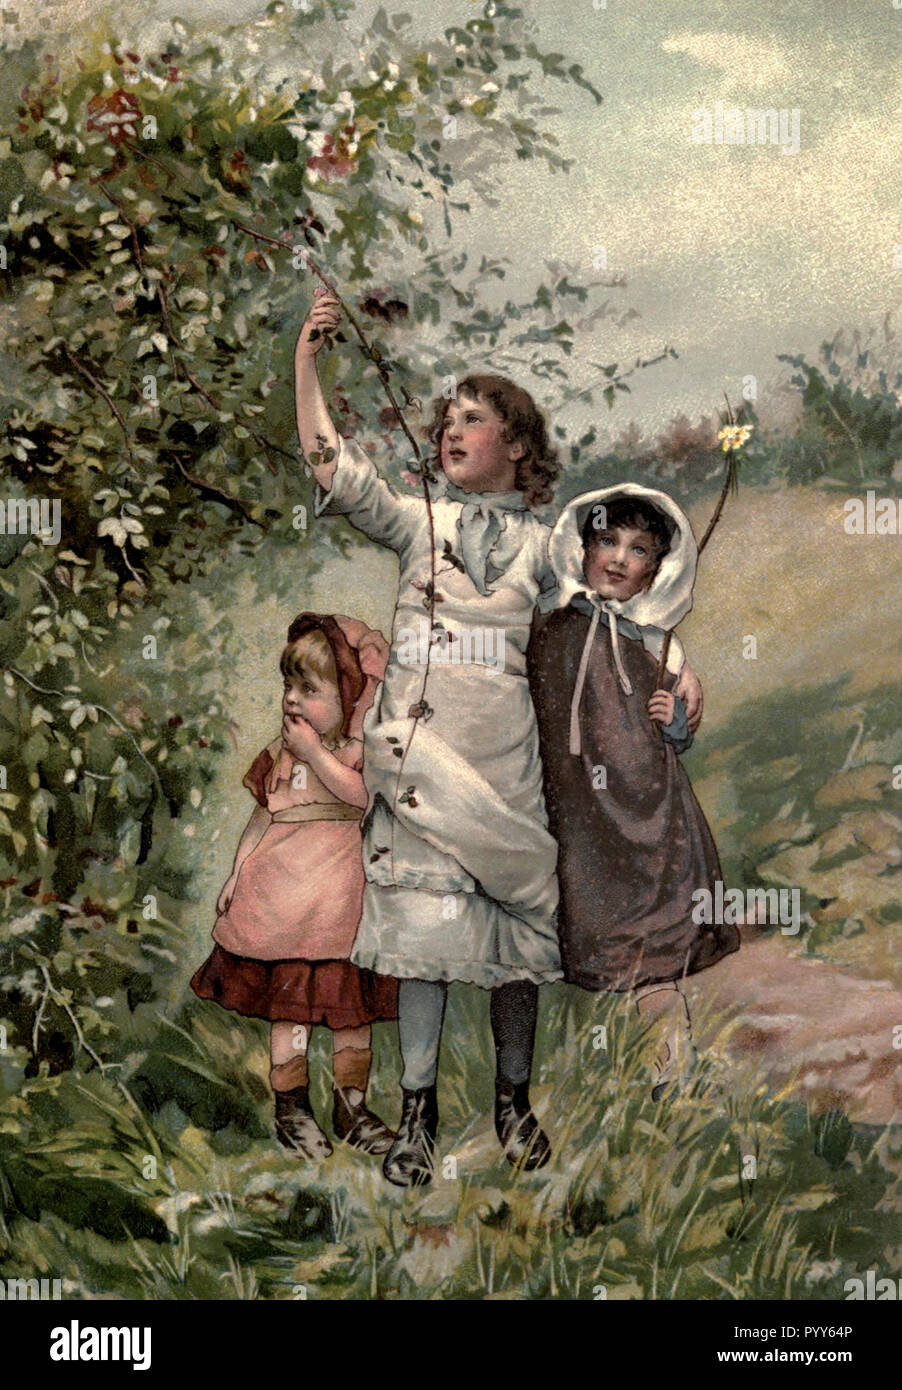 La época dorada de la infancia en la época victoriana Foto de stock